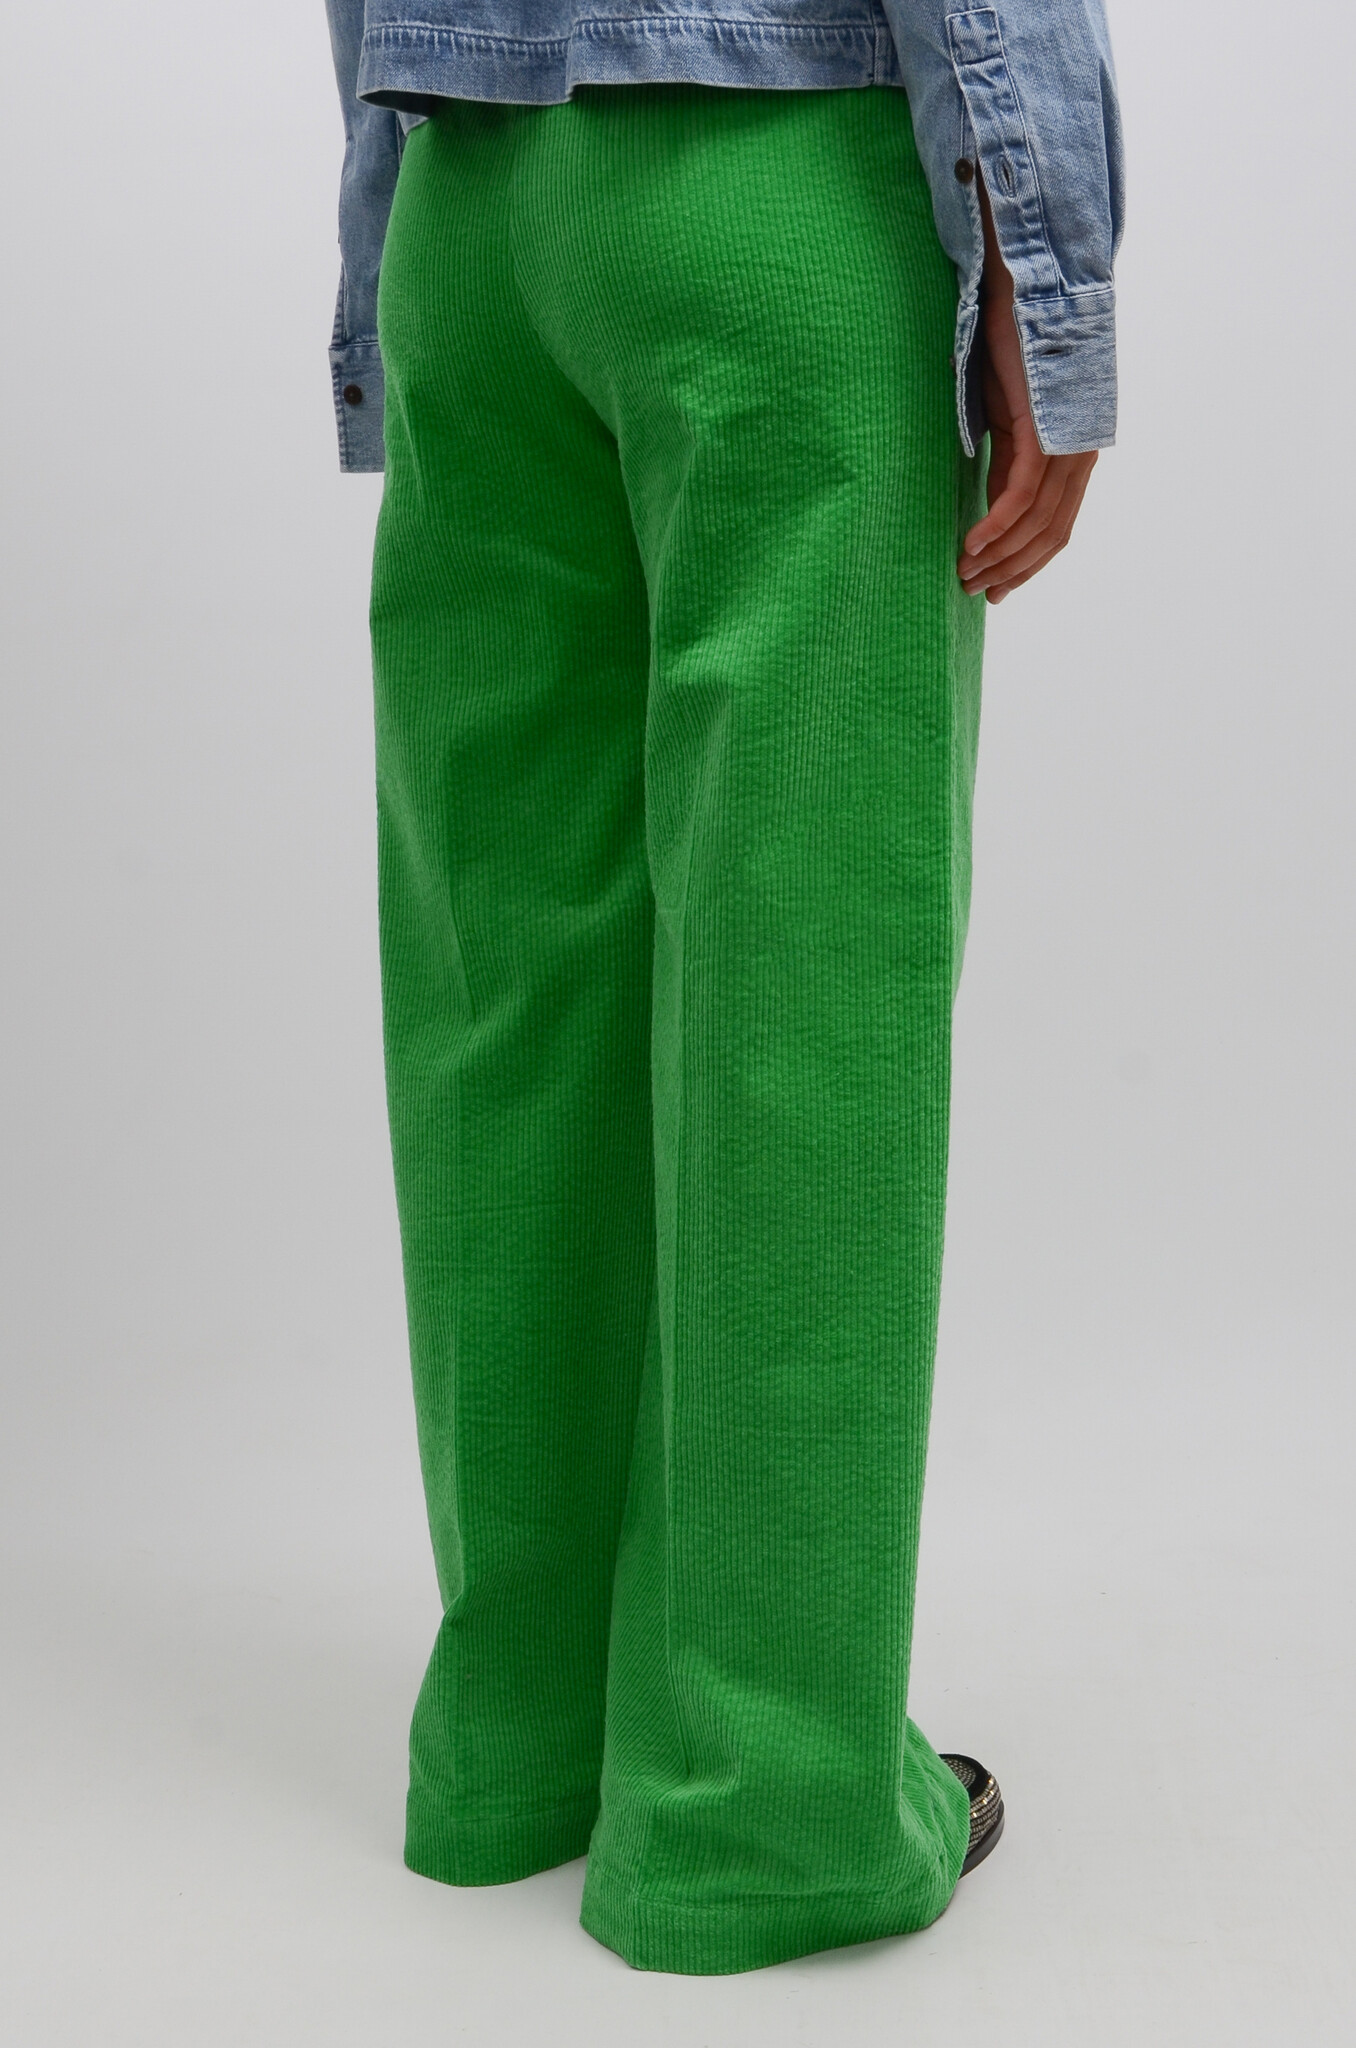 Woody Pants 70s Original in Parrot Green-6